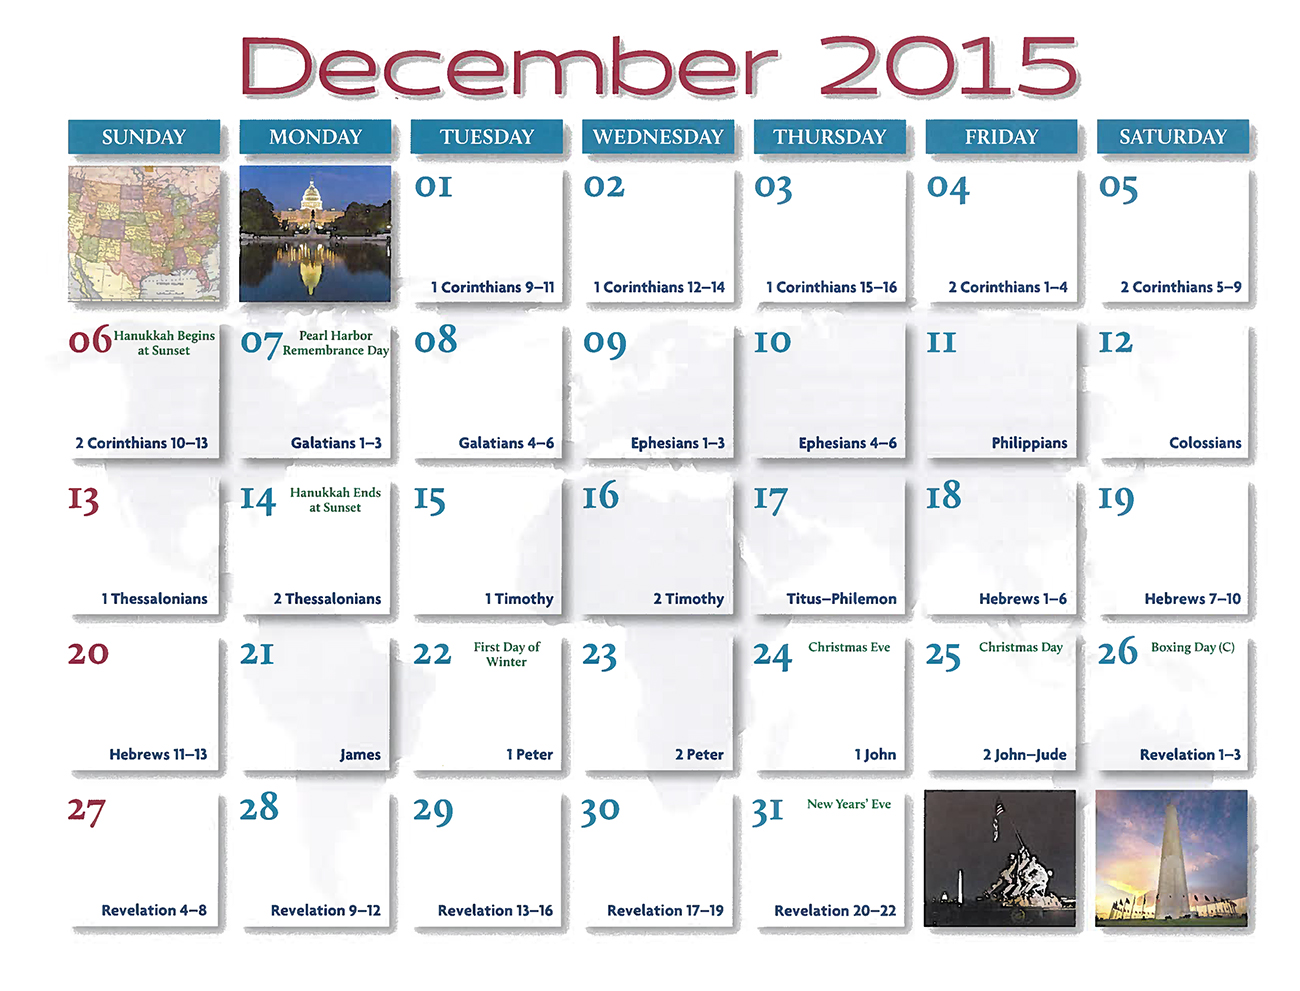 2015 Prophecy Calendar: December - Calendar